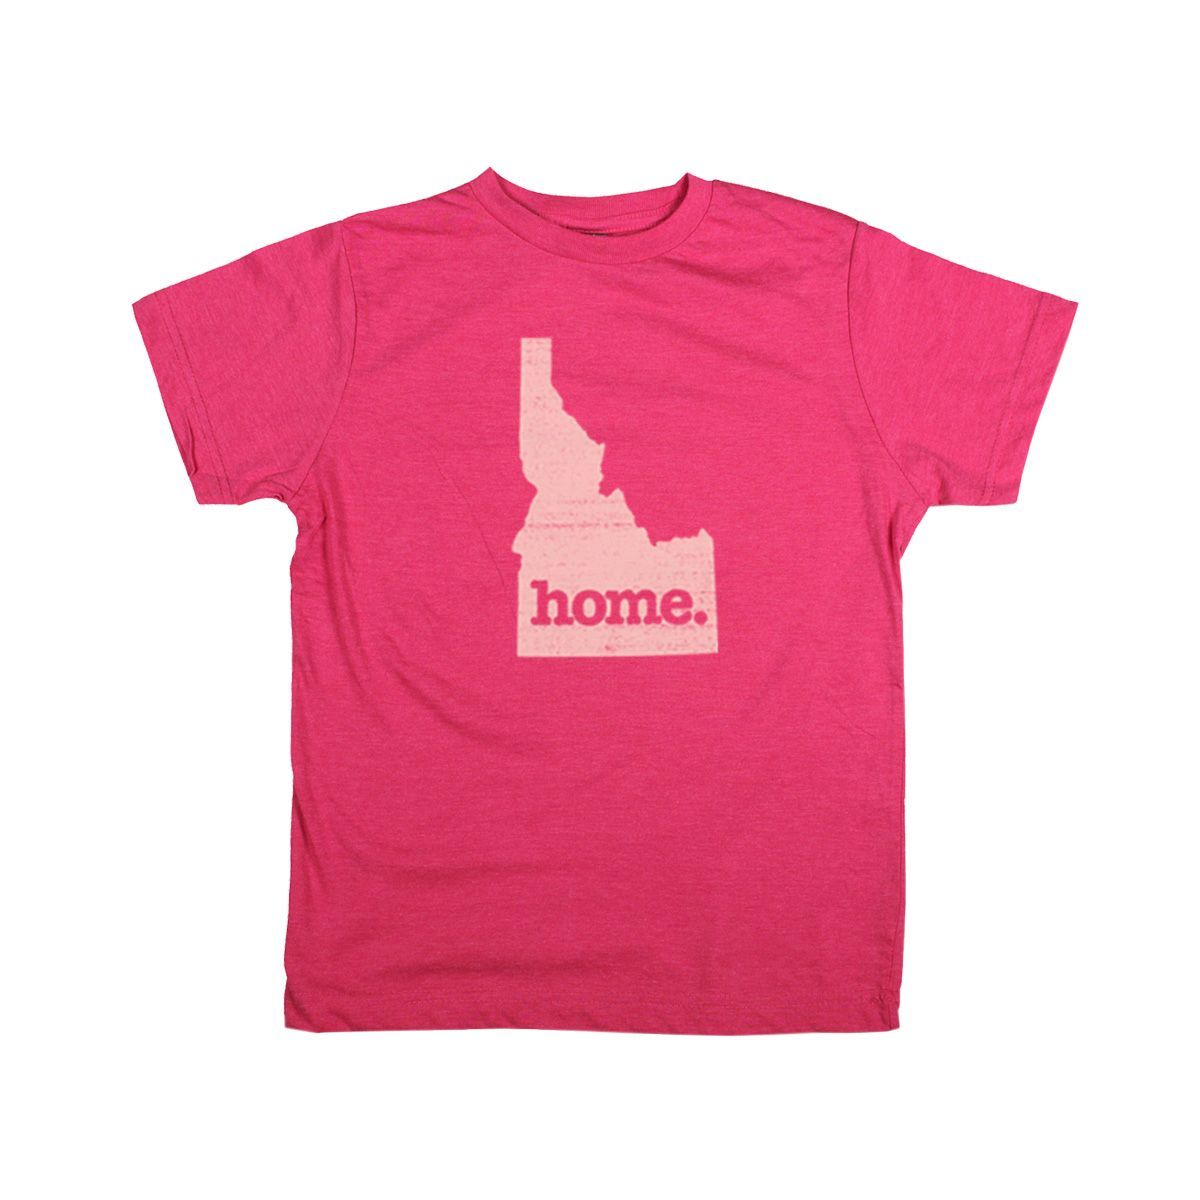 home. Youth/Toddler T-Shirt - Hawaii